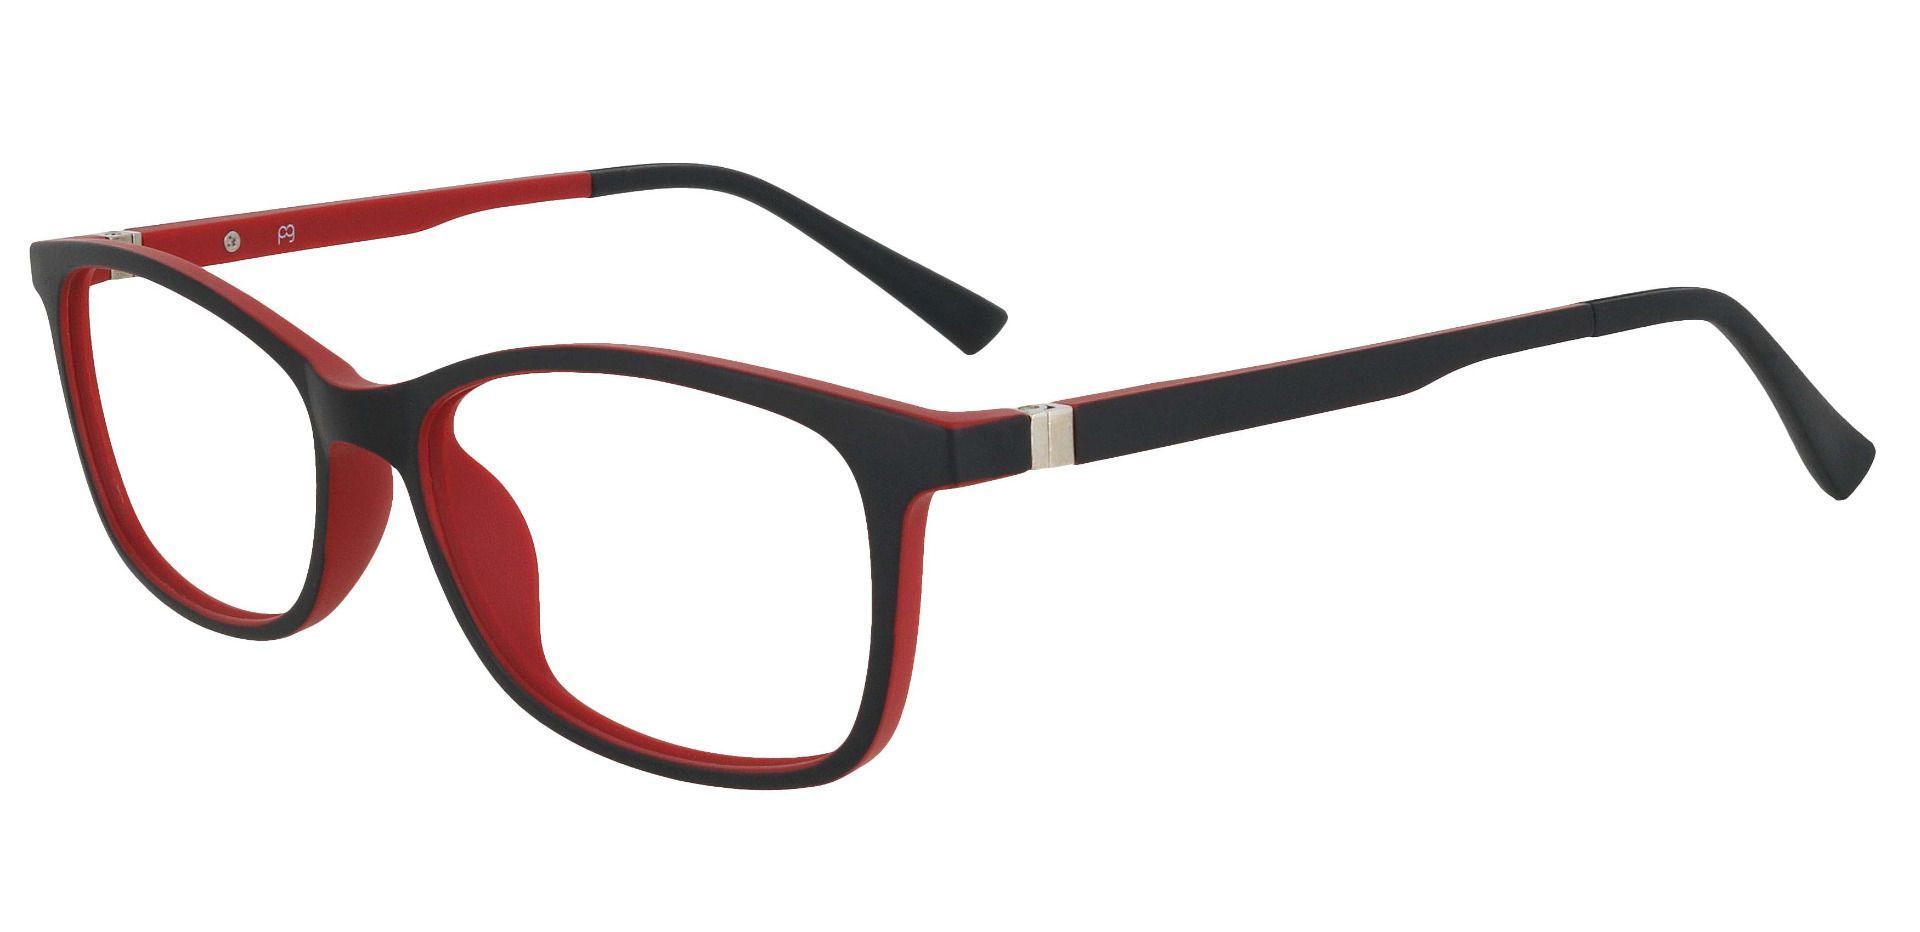 Segura Oval Progressive Glasses - Red